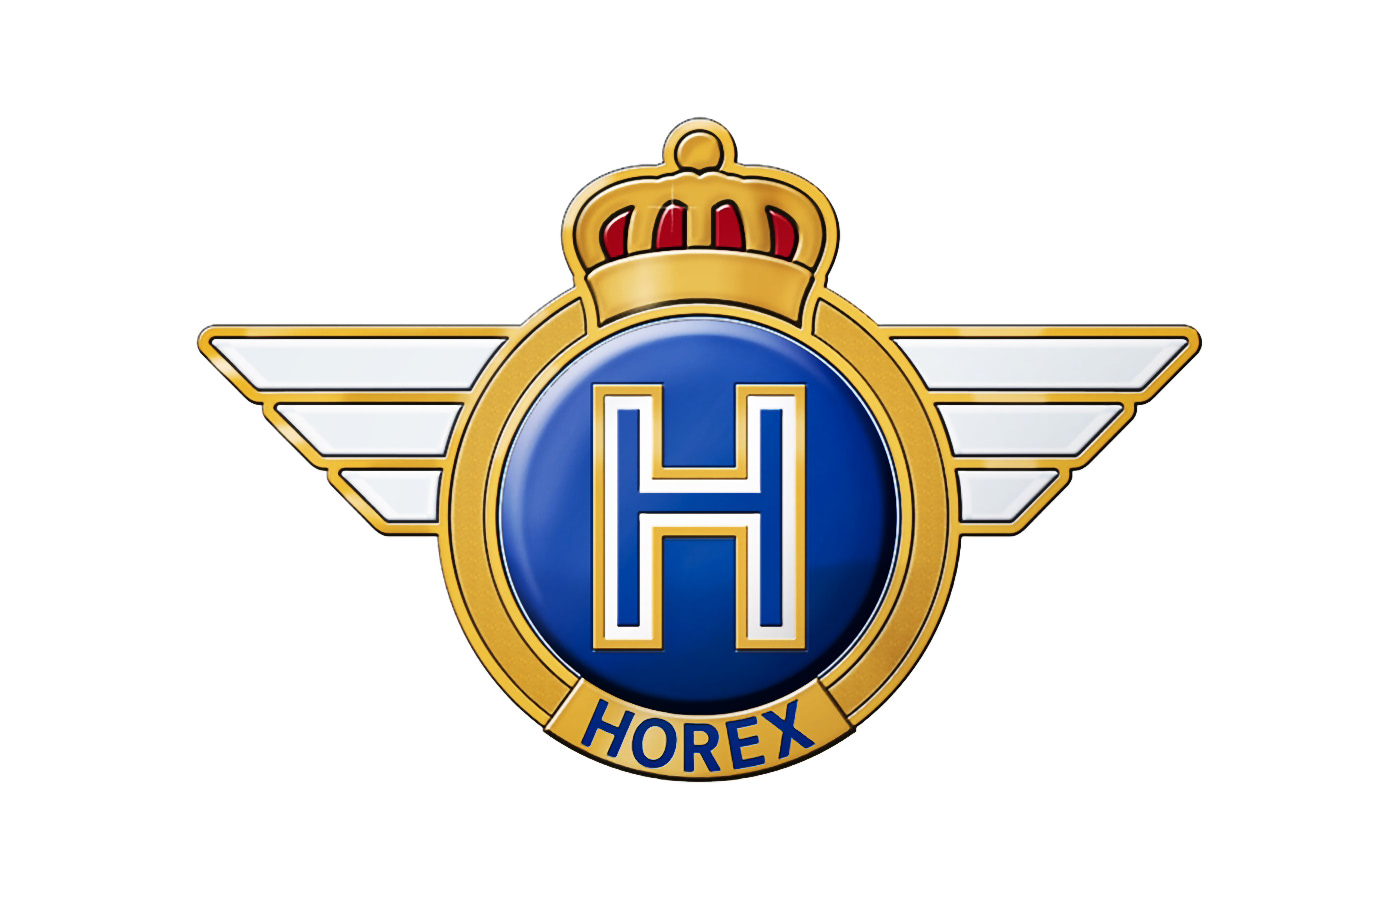 Horex emblem